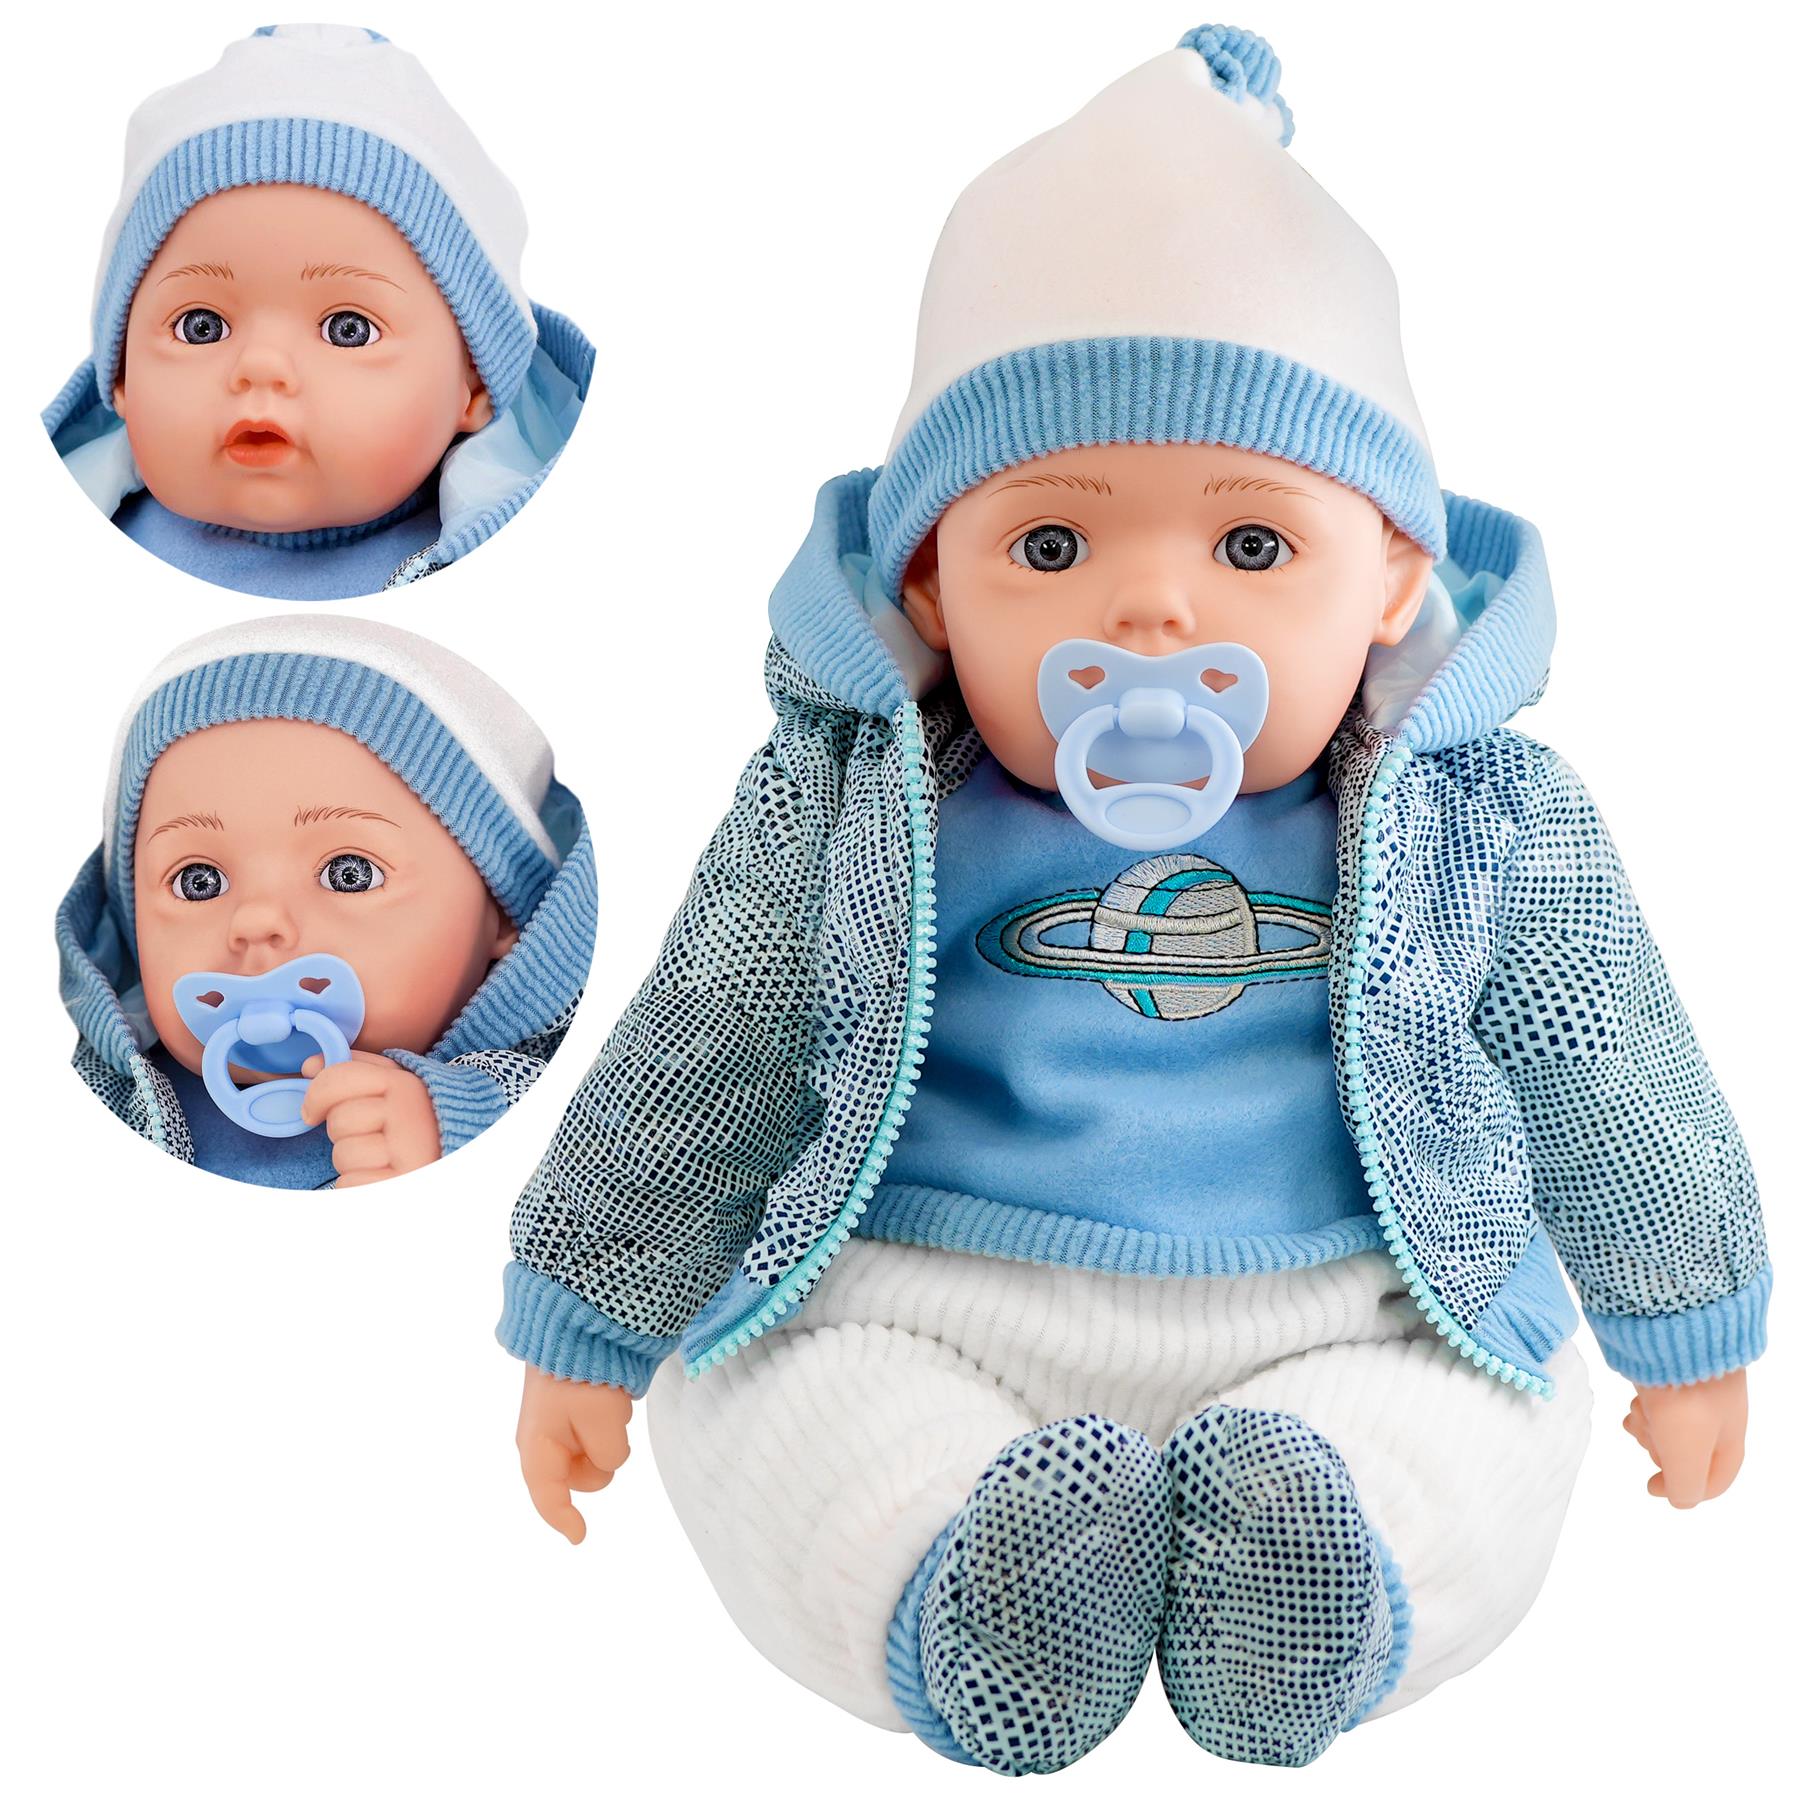 20" Bibi Boy Doll In Blue Space Jacket by BiBi Doll - The Magic Toy Shop